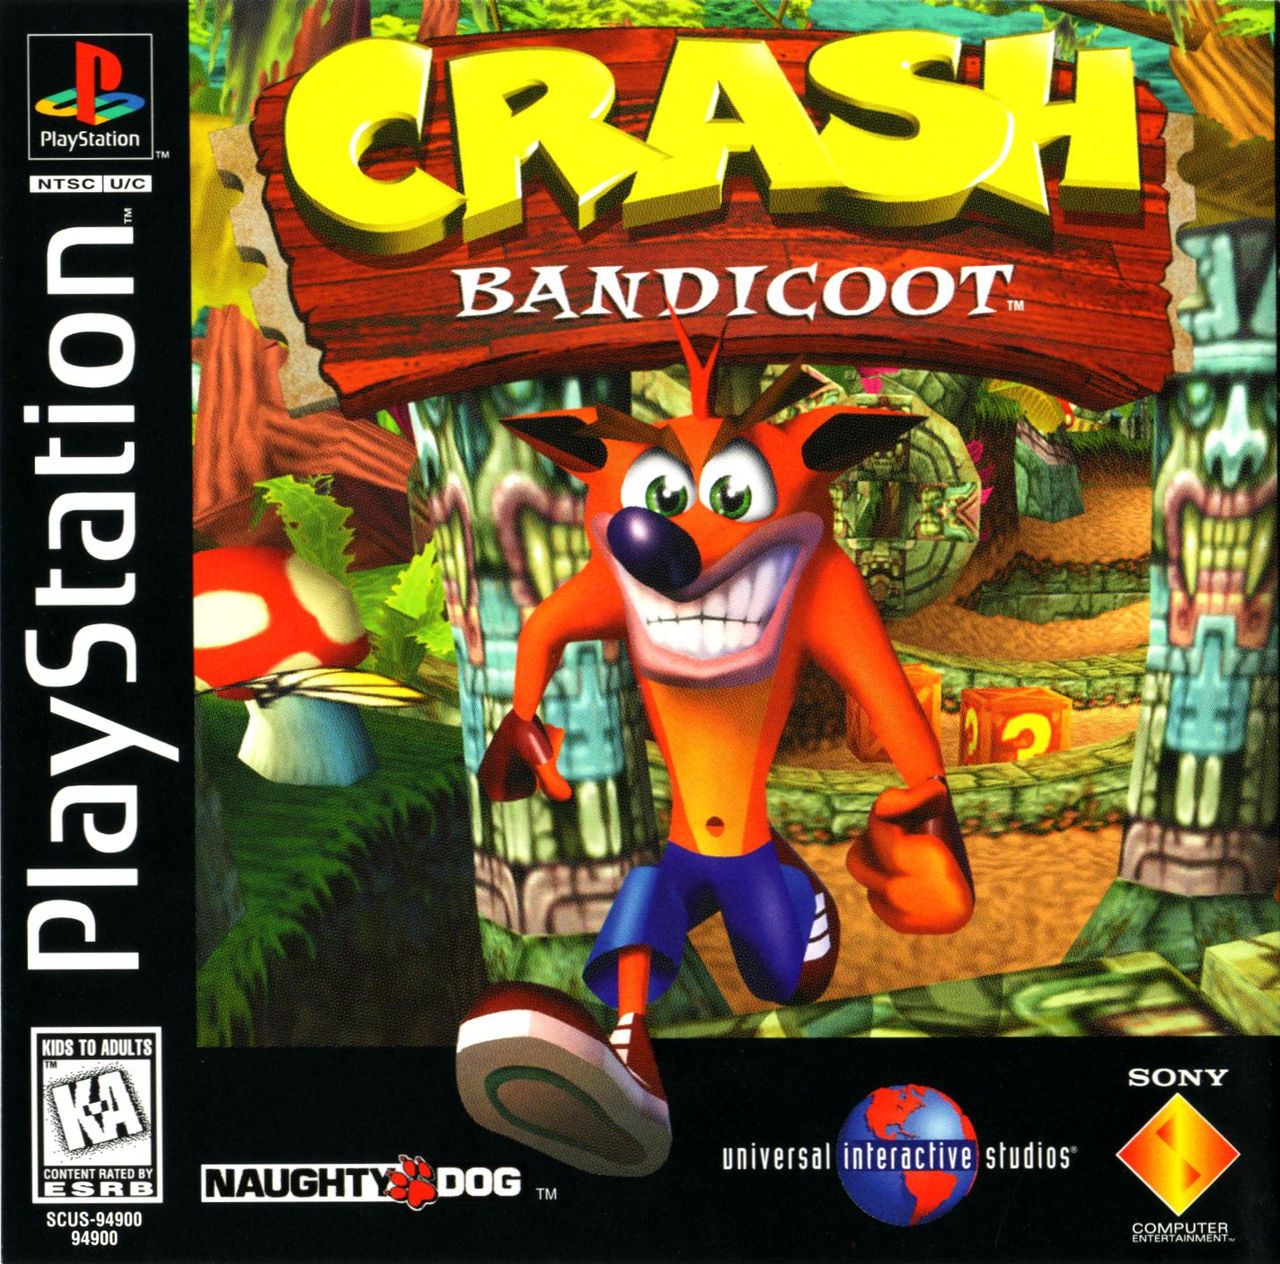 Crash PlayStation 1 (1996) by SonicLoud1213 on DeviantArt